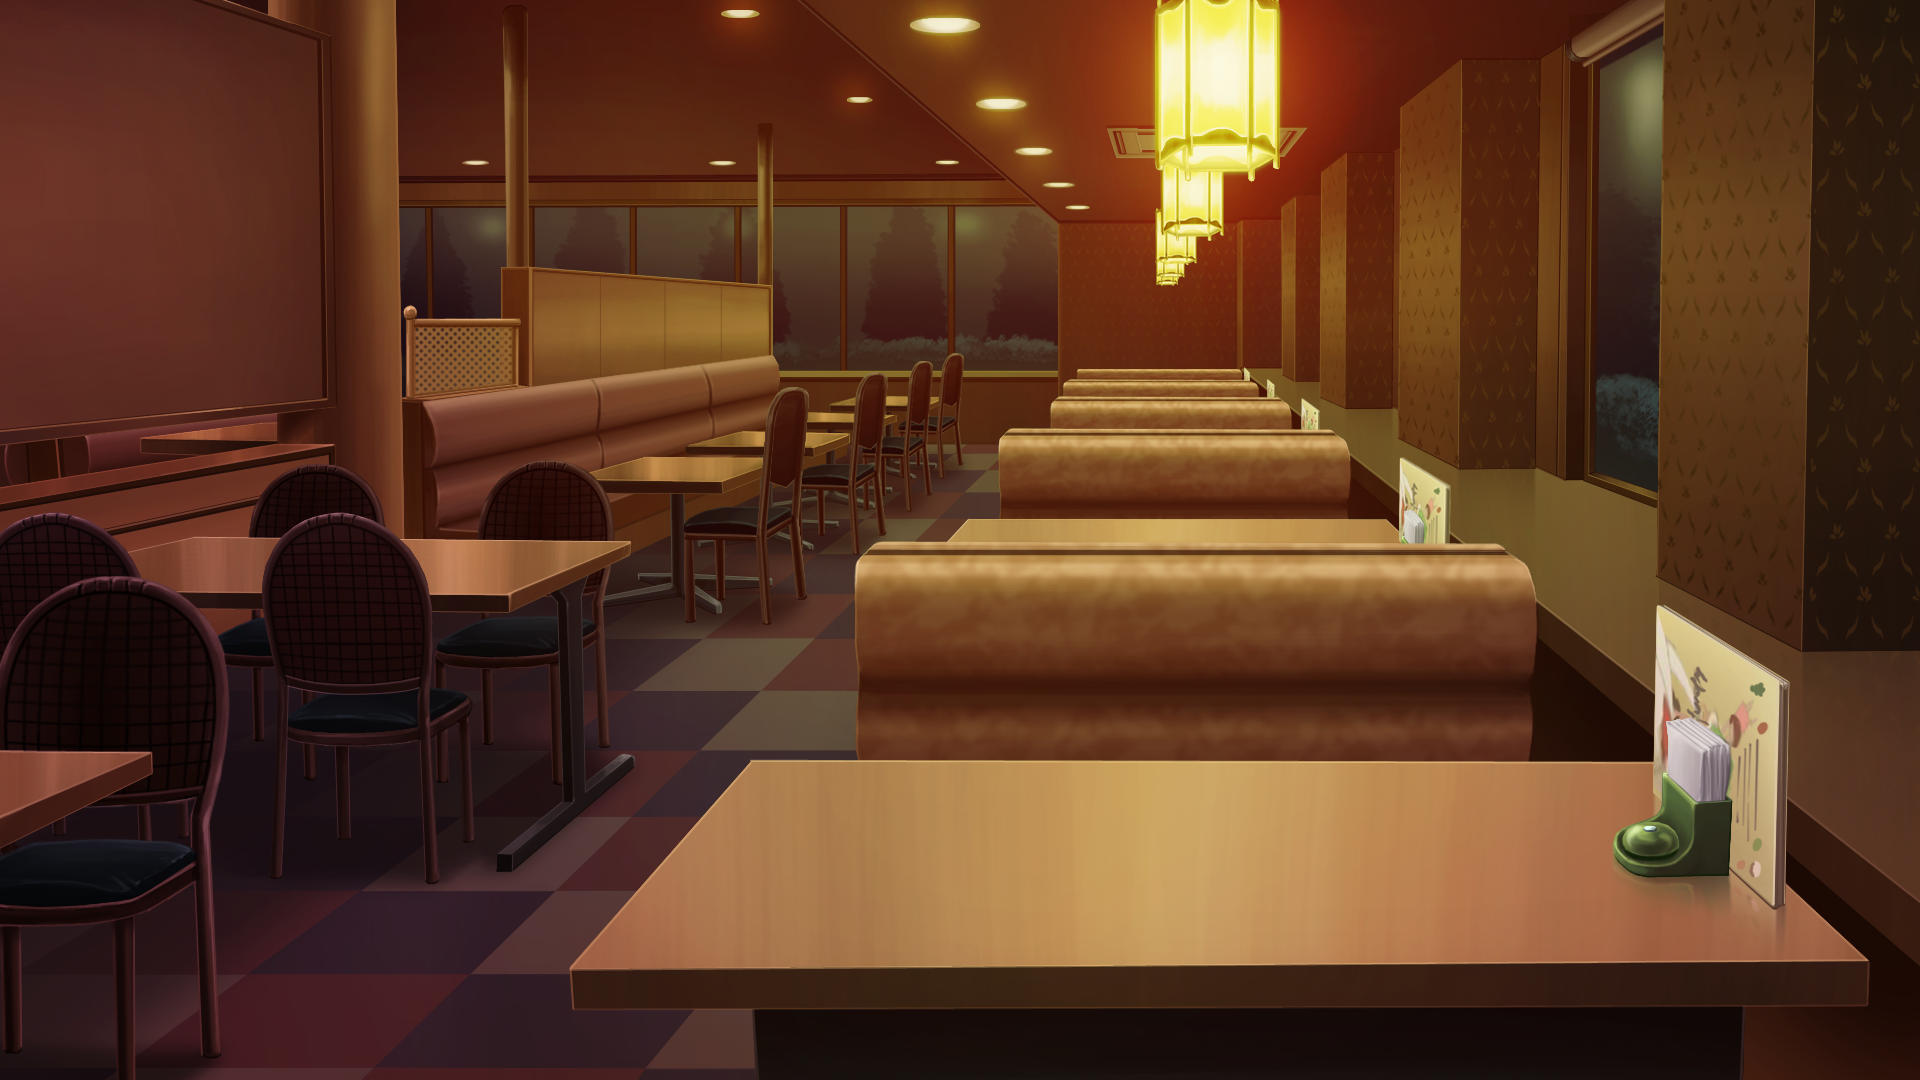 Coffee Shop Anime Cafe Background